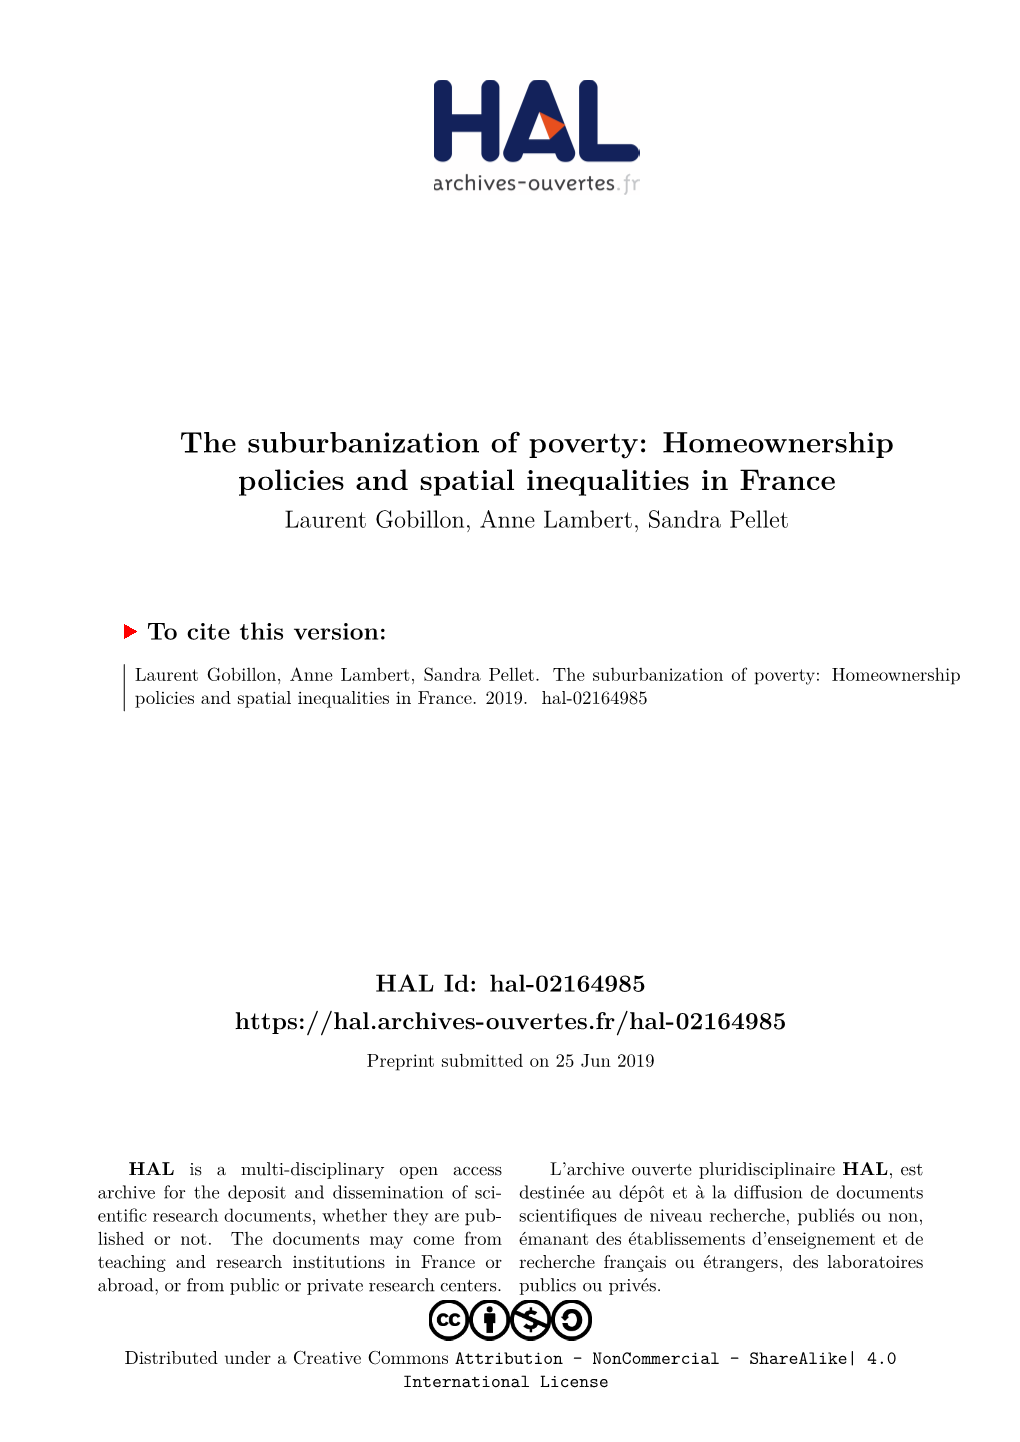 Homeownership Policies and Spatial Inequalities in France Laurent Gobillon, Anne Lambert, Sandra Pellet